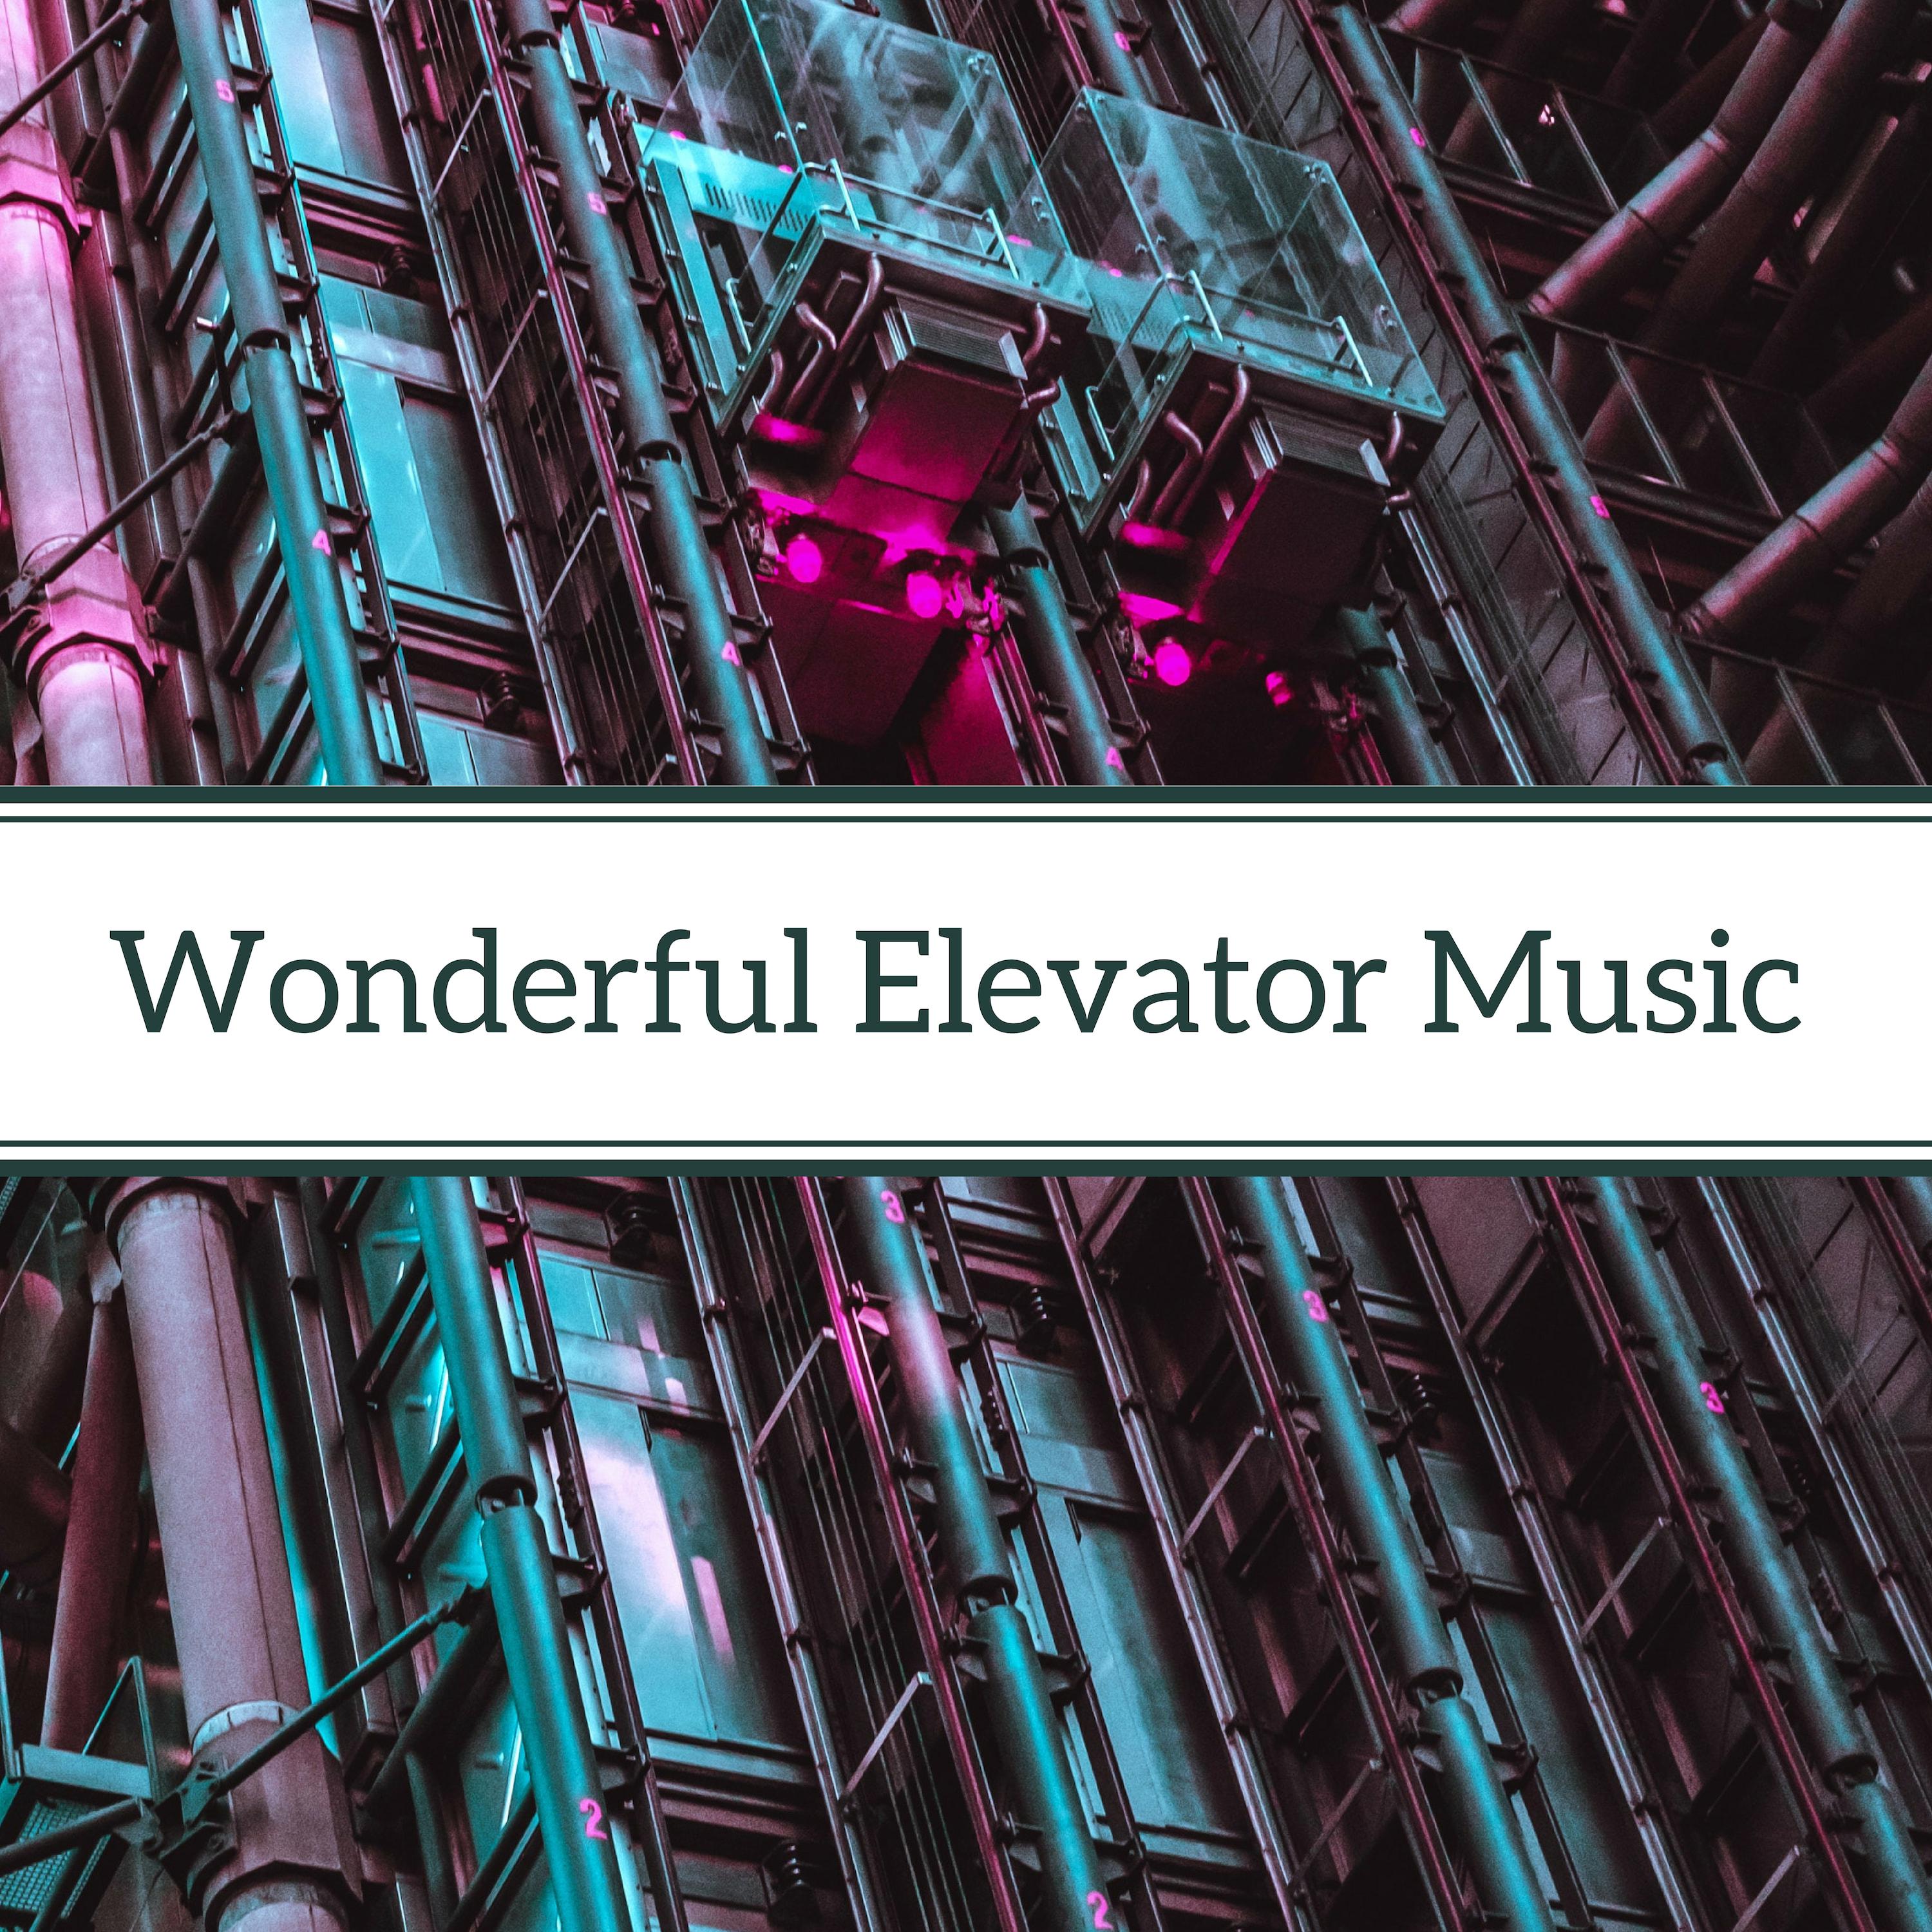 Wonderful Elevator Music - Best Background Instrumentals for Coffee, Creativity and Busy Work